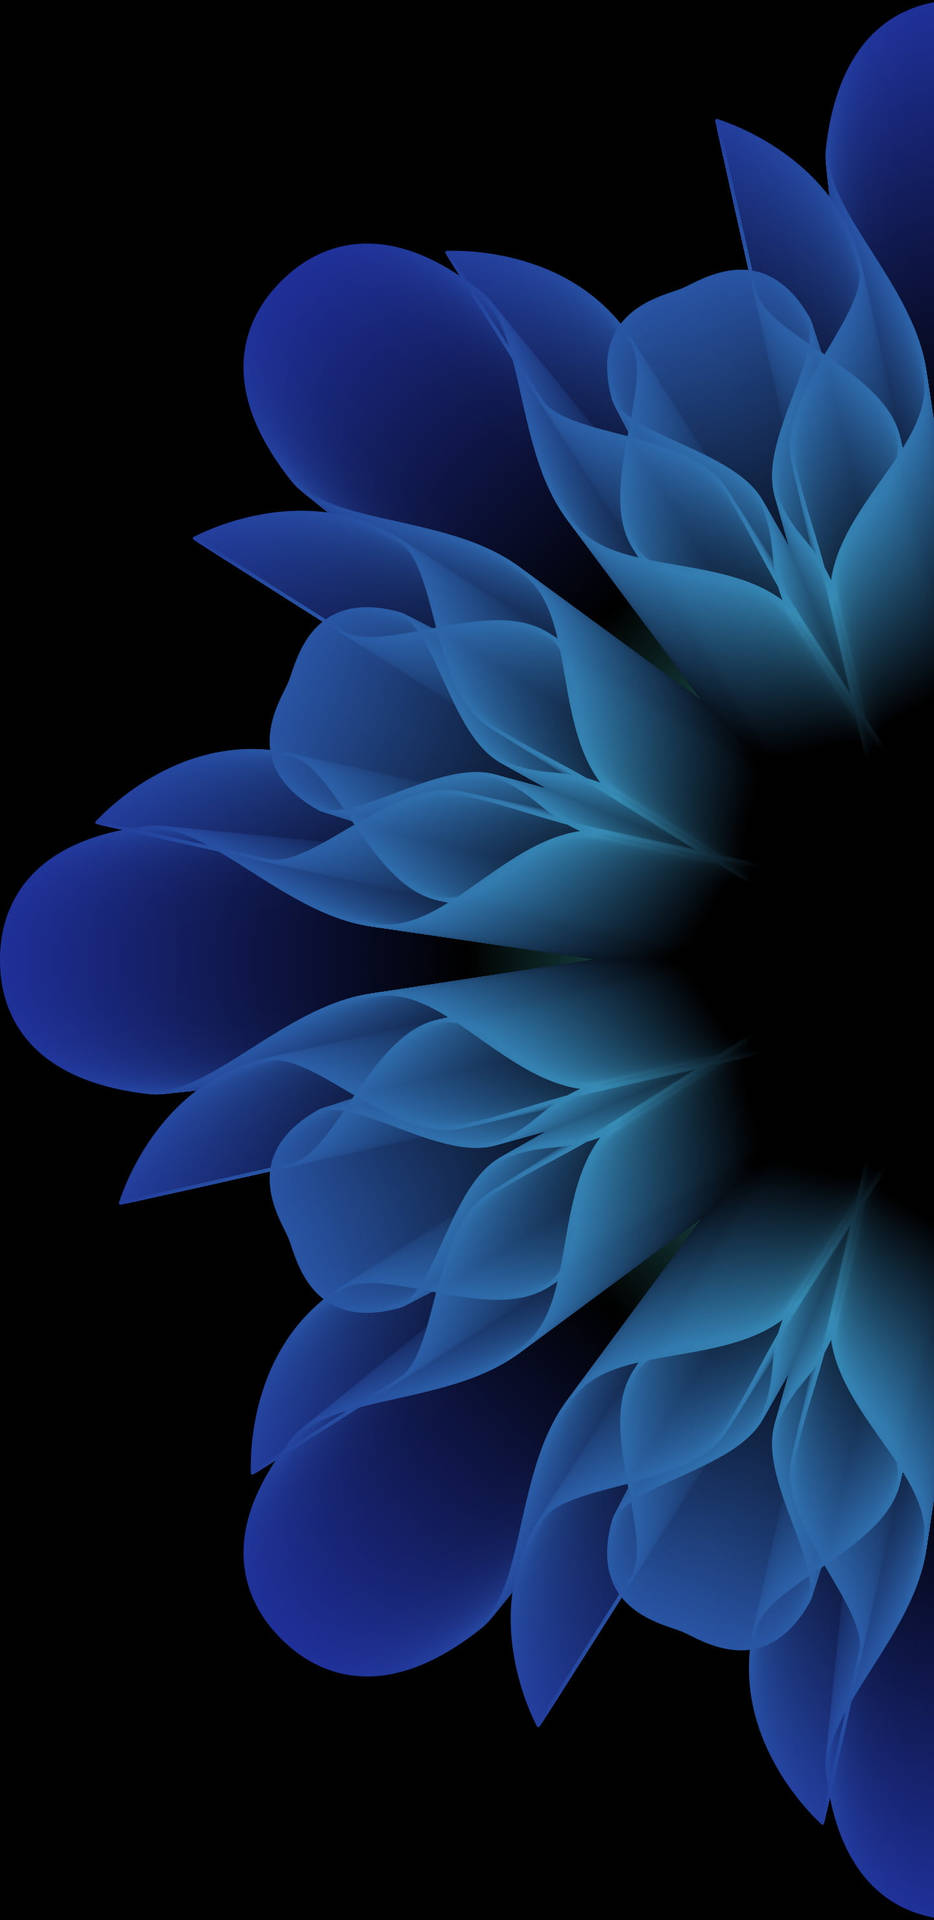 Amoledandroid Solid Pastel Blue Flower (in Swedish): Amoled Android Enfärgad Pastellblå Blomma. Wallpaper